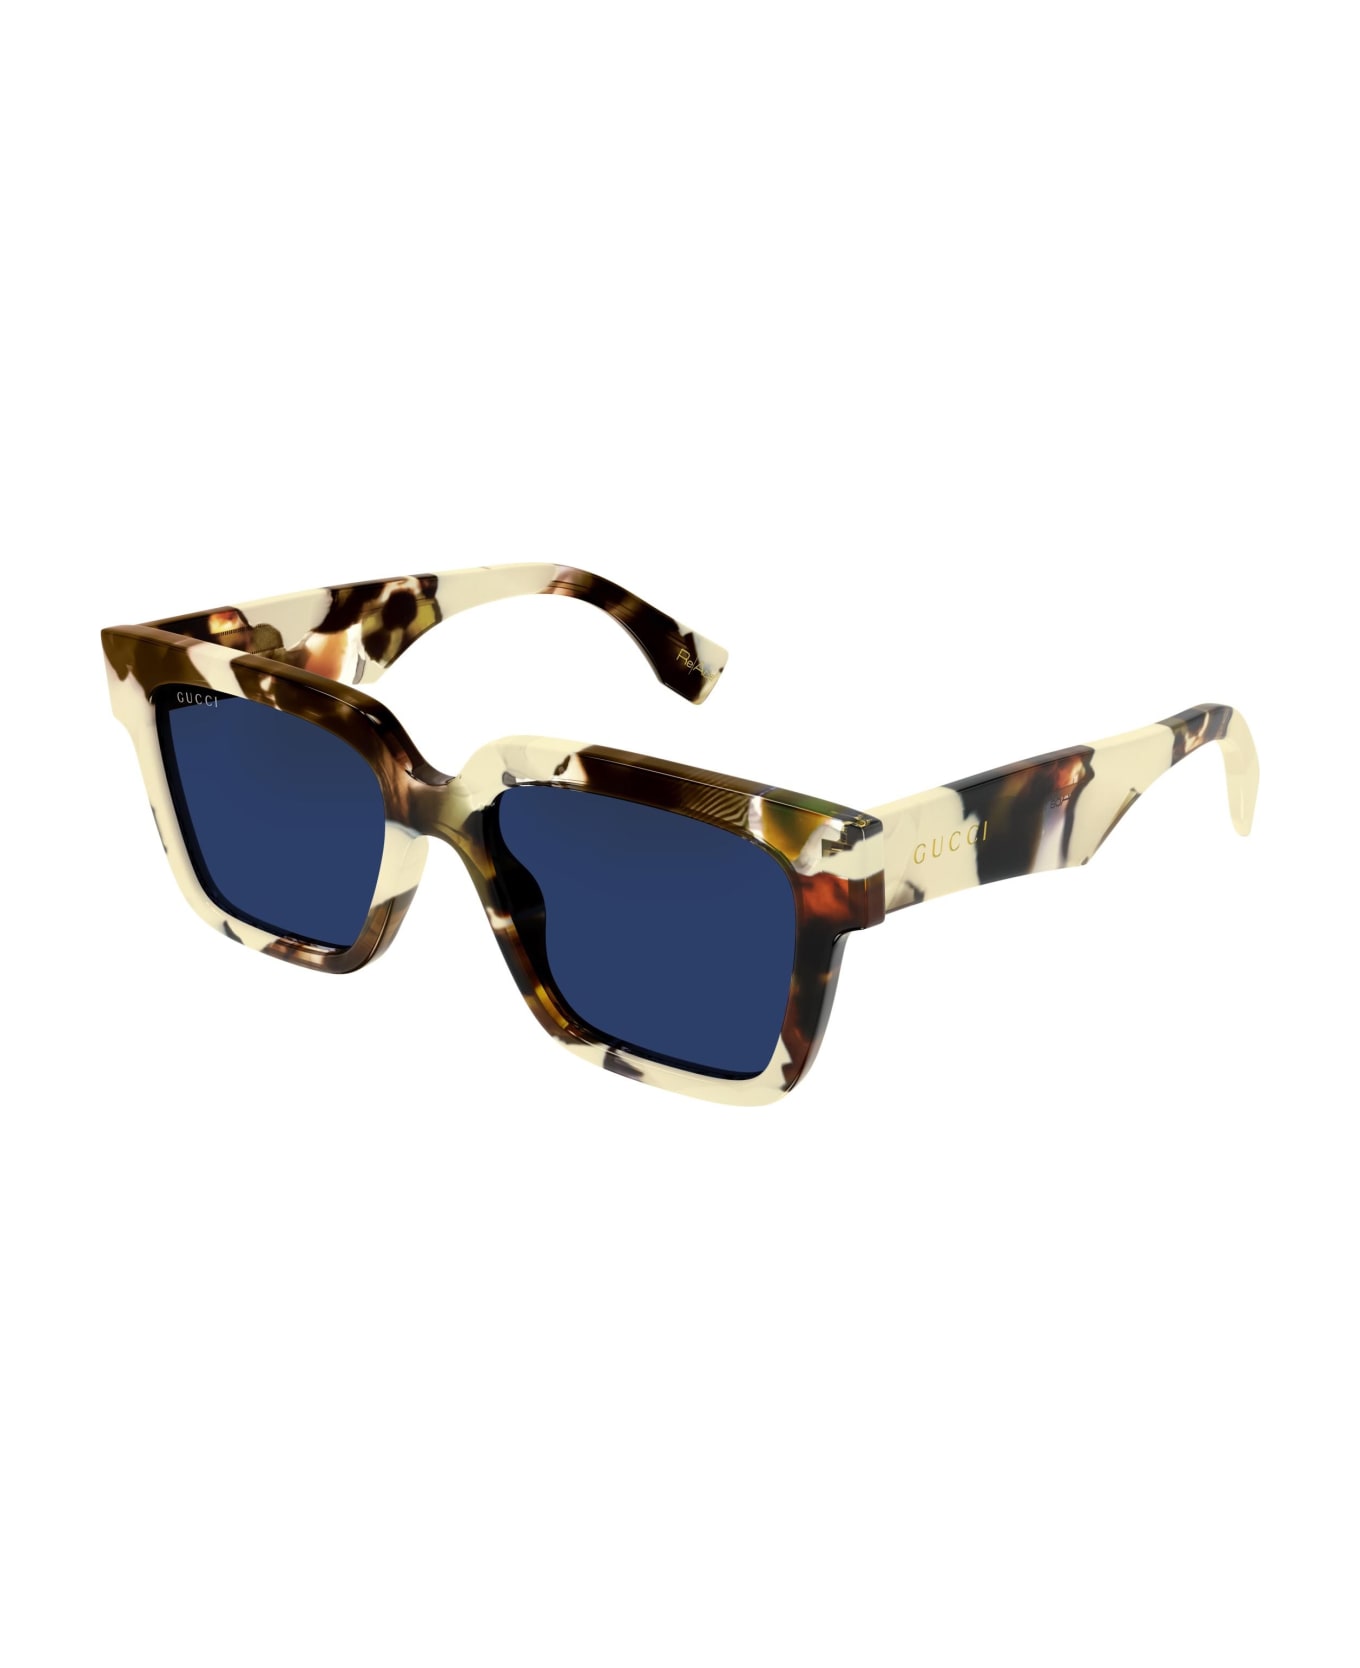 Gucci Eyewear Sunglasses - Havana chiaro/Blu